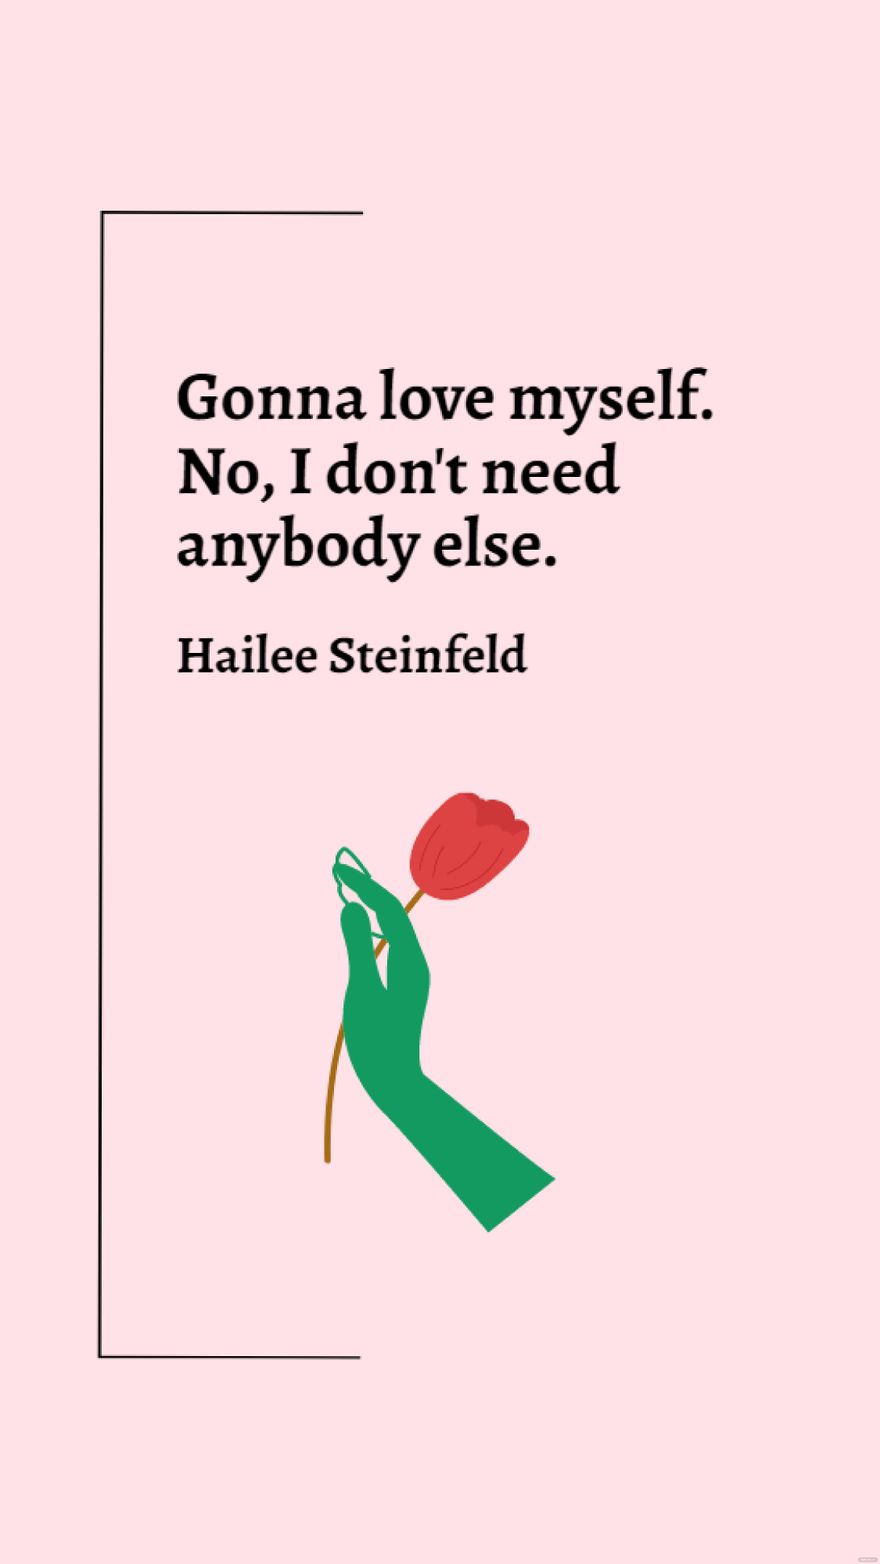 Hailee Steinfeld - Gonna love myself. No, I don't need anybody else. in JPG